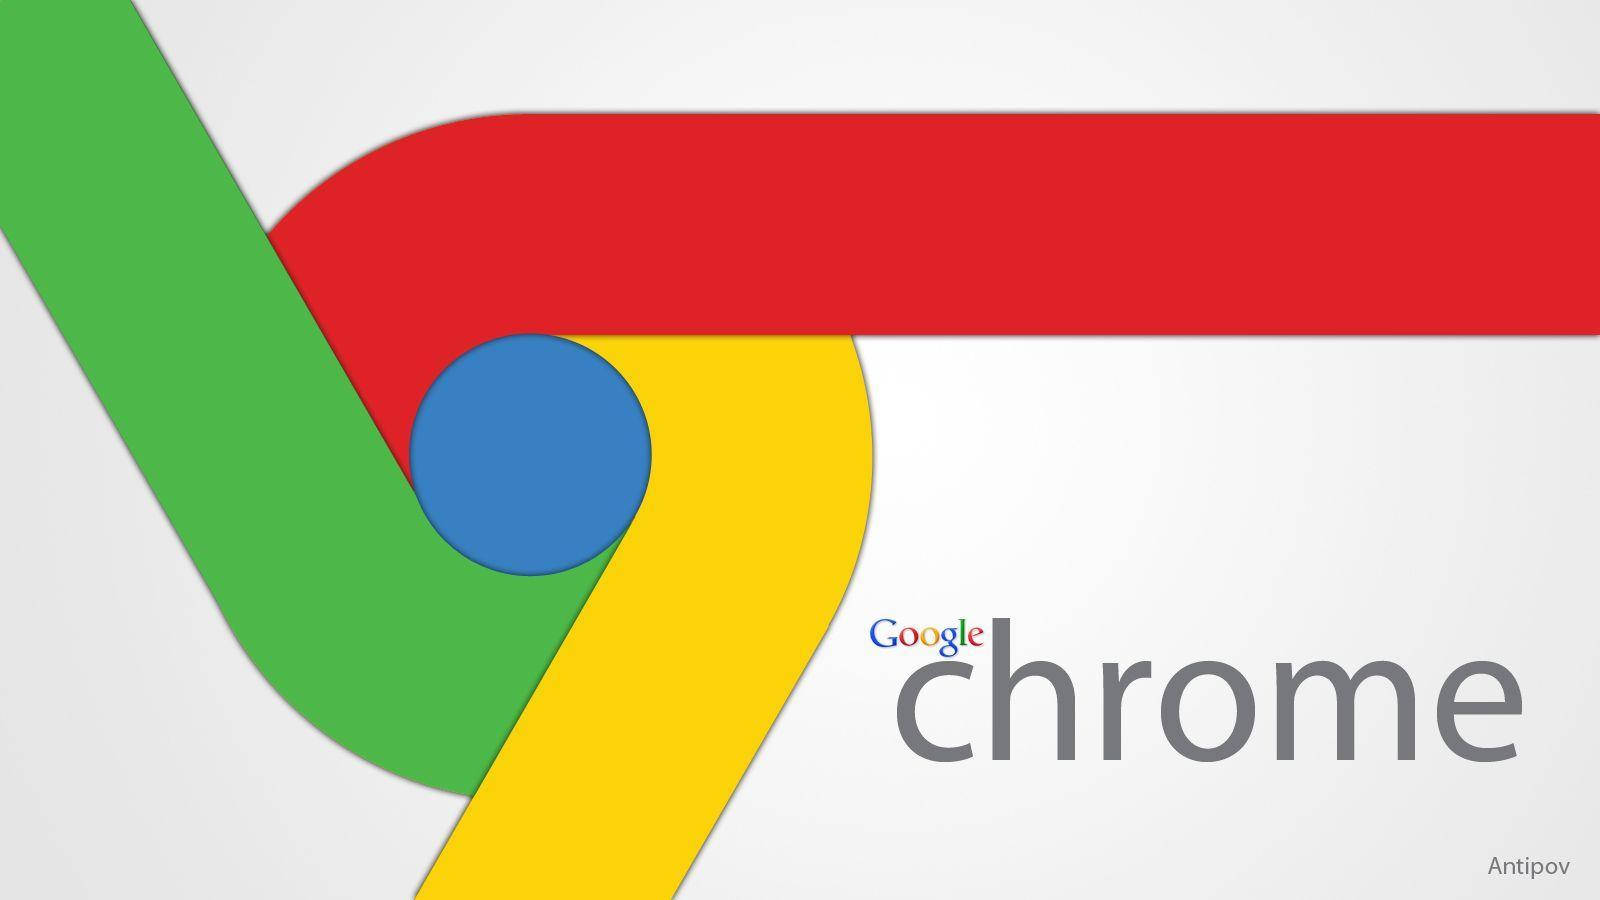 Google Chrome Logo In White Picture